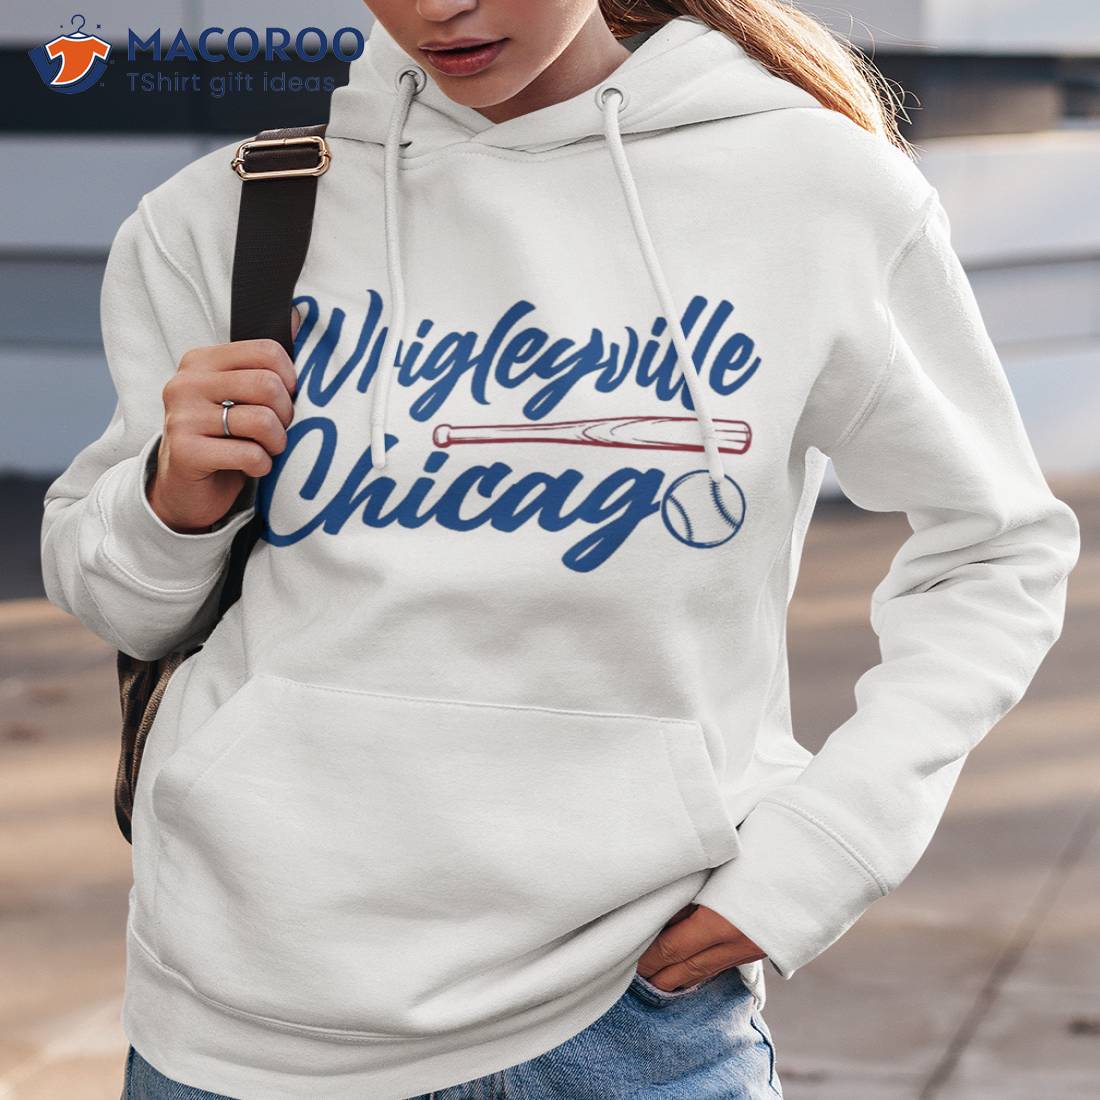 Wrigleyville Chicago Baseball American T-Shirt